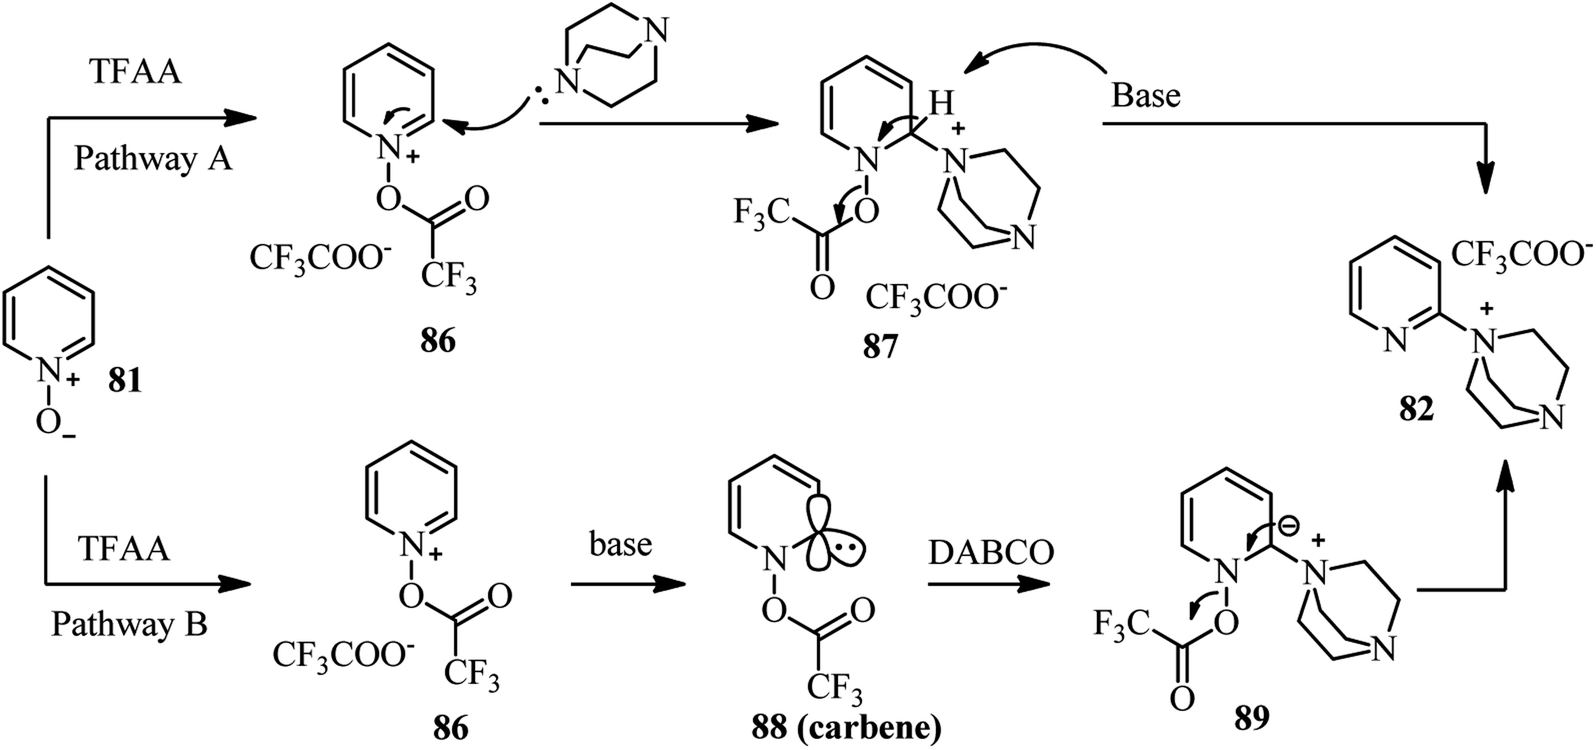 DABCO bond cleavage for the synthesis of piperazine derivatives - RSC  Advances (RSC Publishing) DOI:10.1039/C9RA07870C